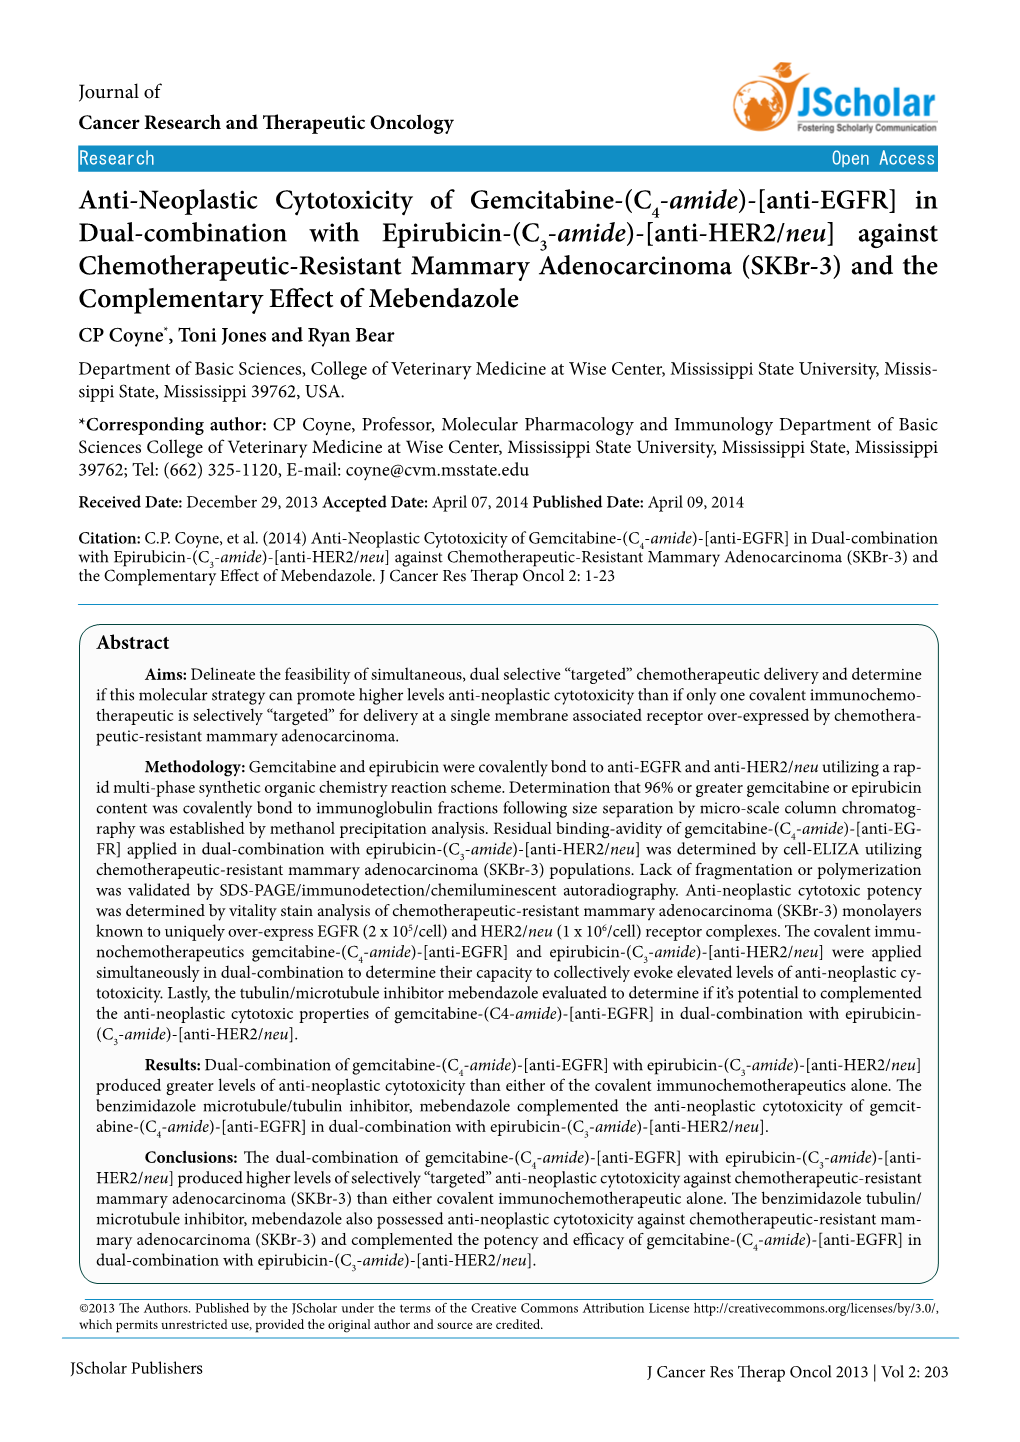 Anti-Neoplastic Cytotoxicity of Gemcitabine-(C -Amide)-[Anti-EGFR]